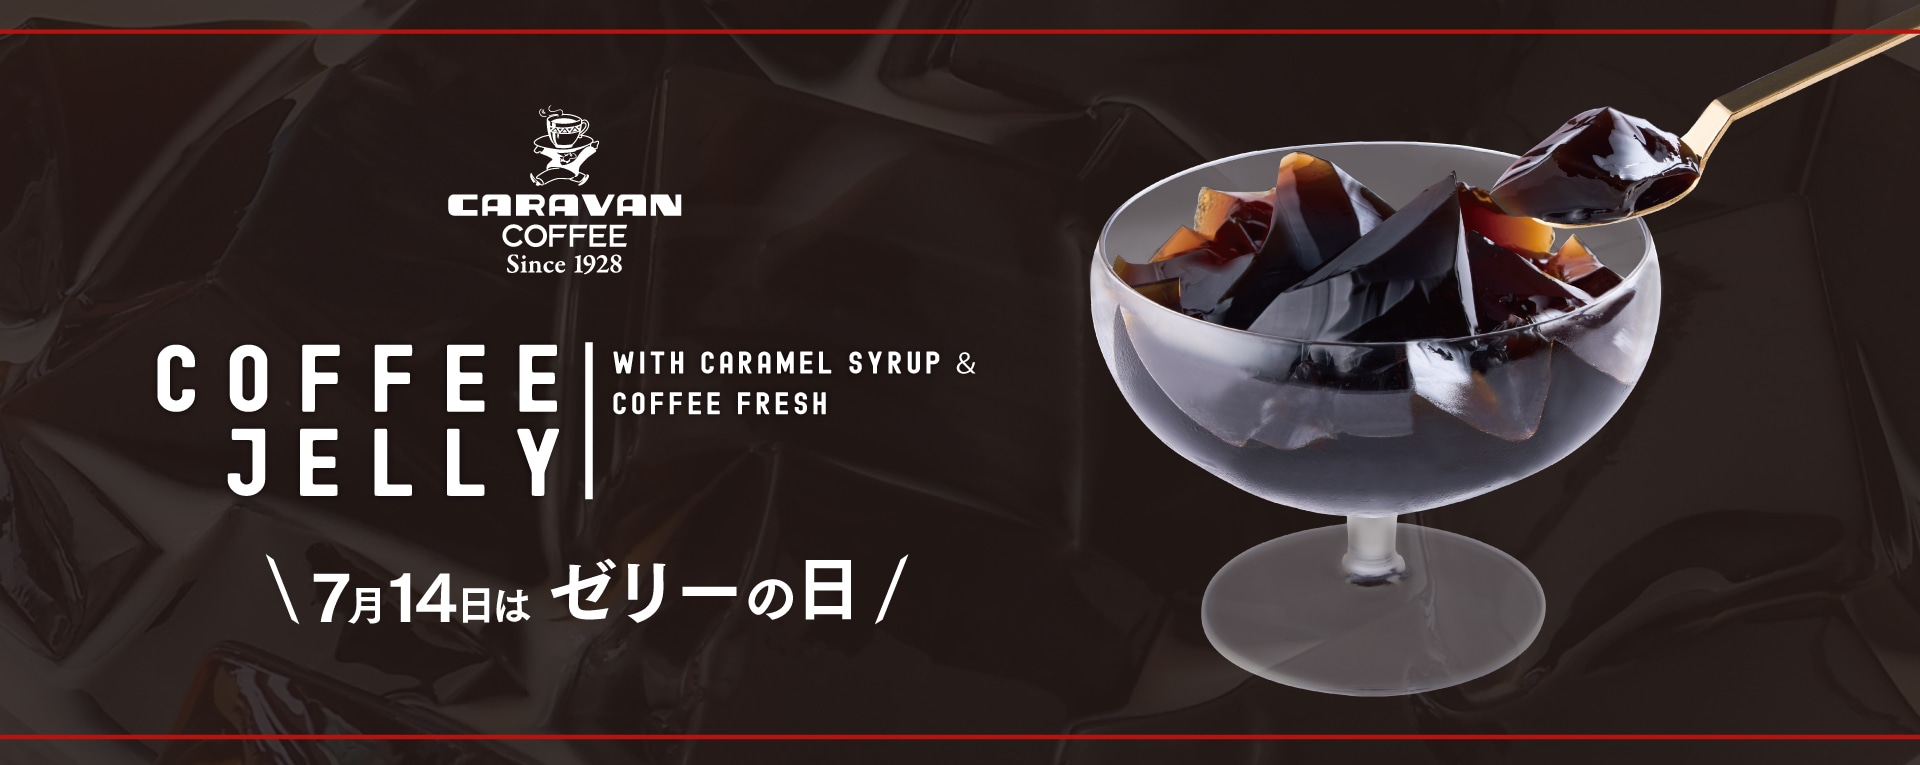 登場! CARAVAN COFFEE 赤い缶 sai-dc.com